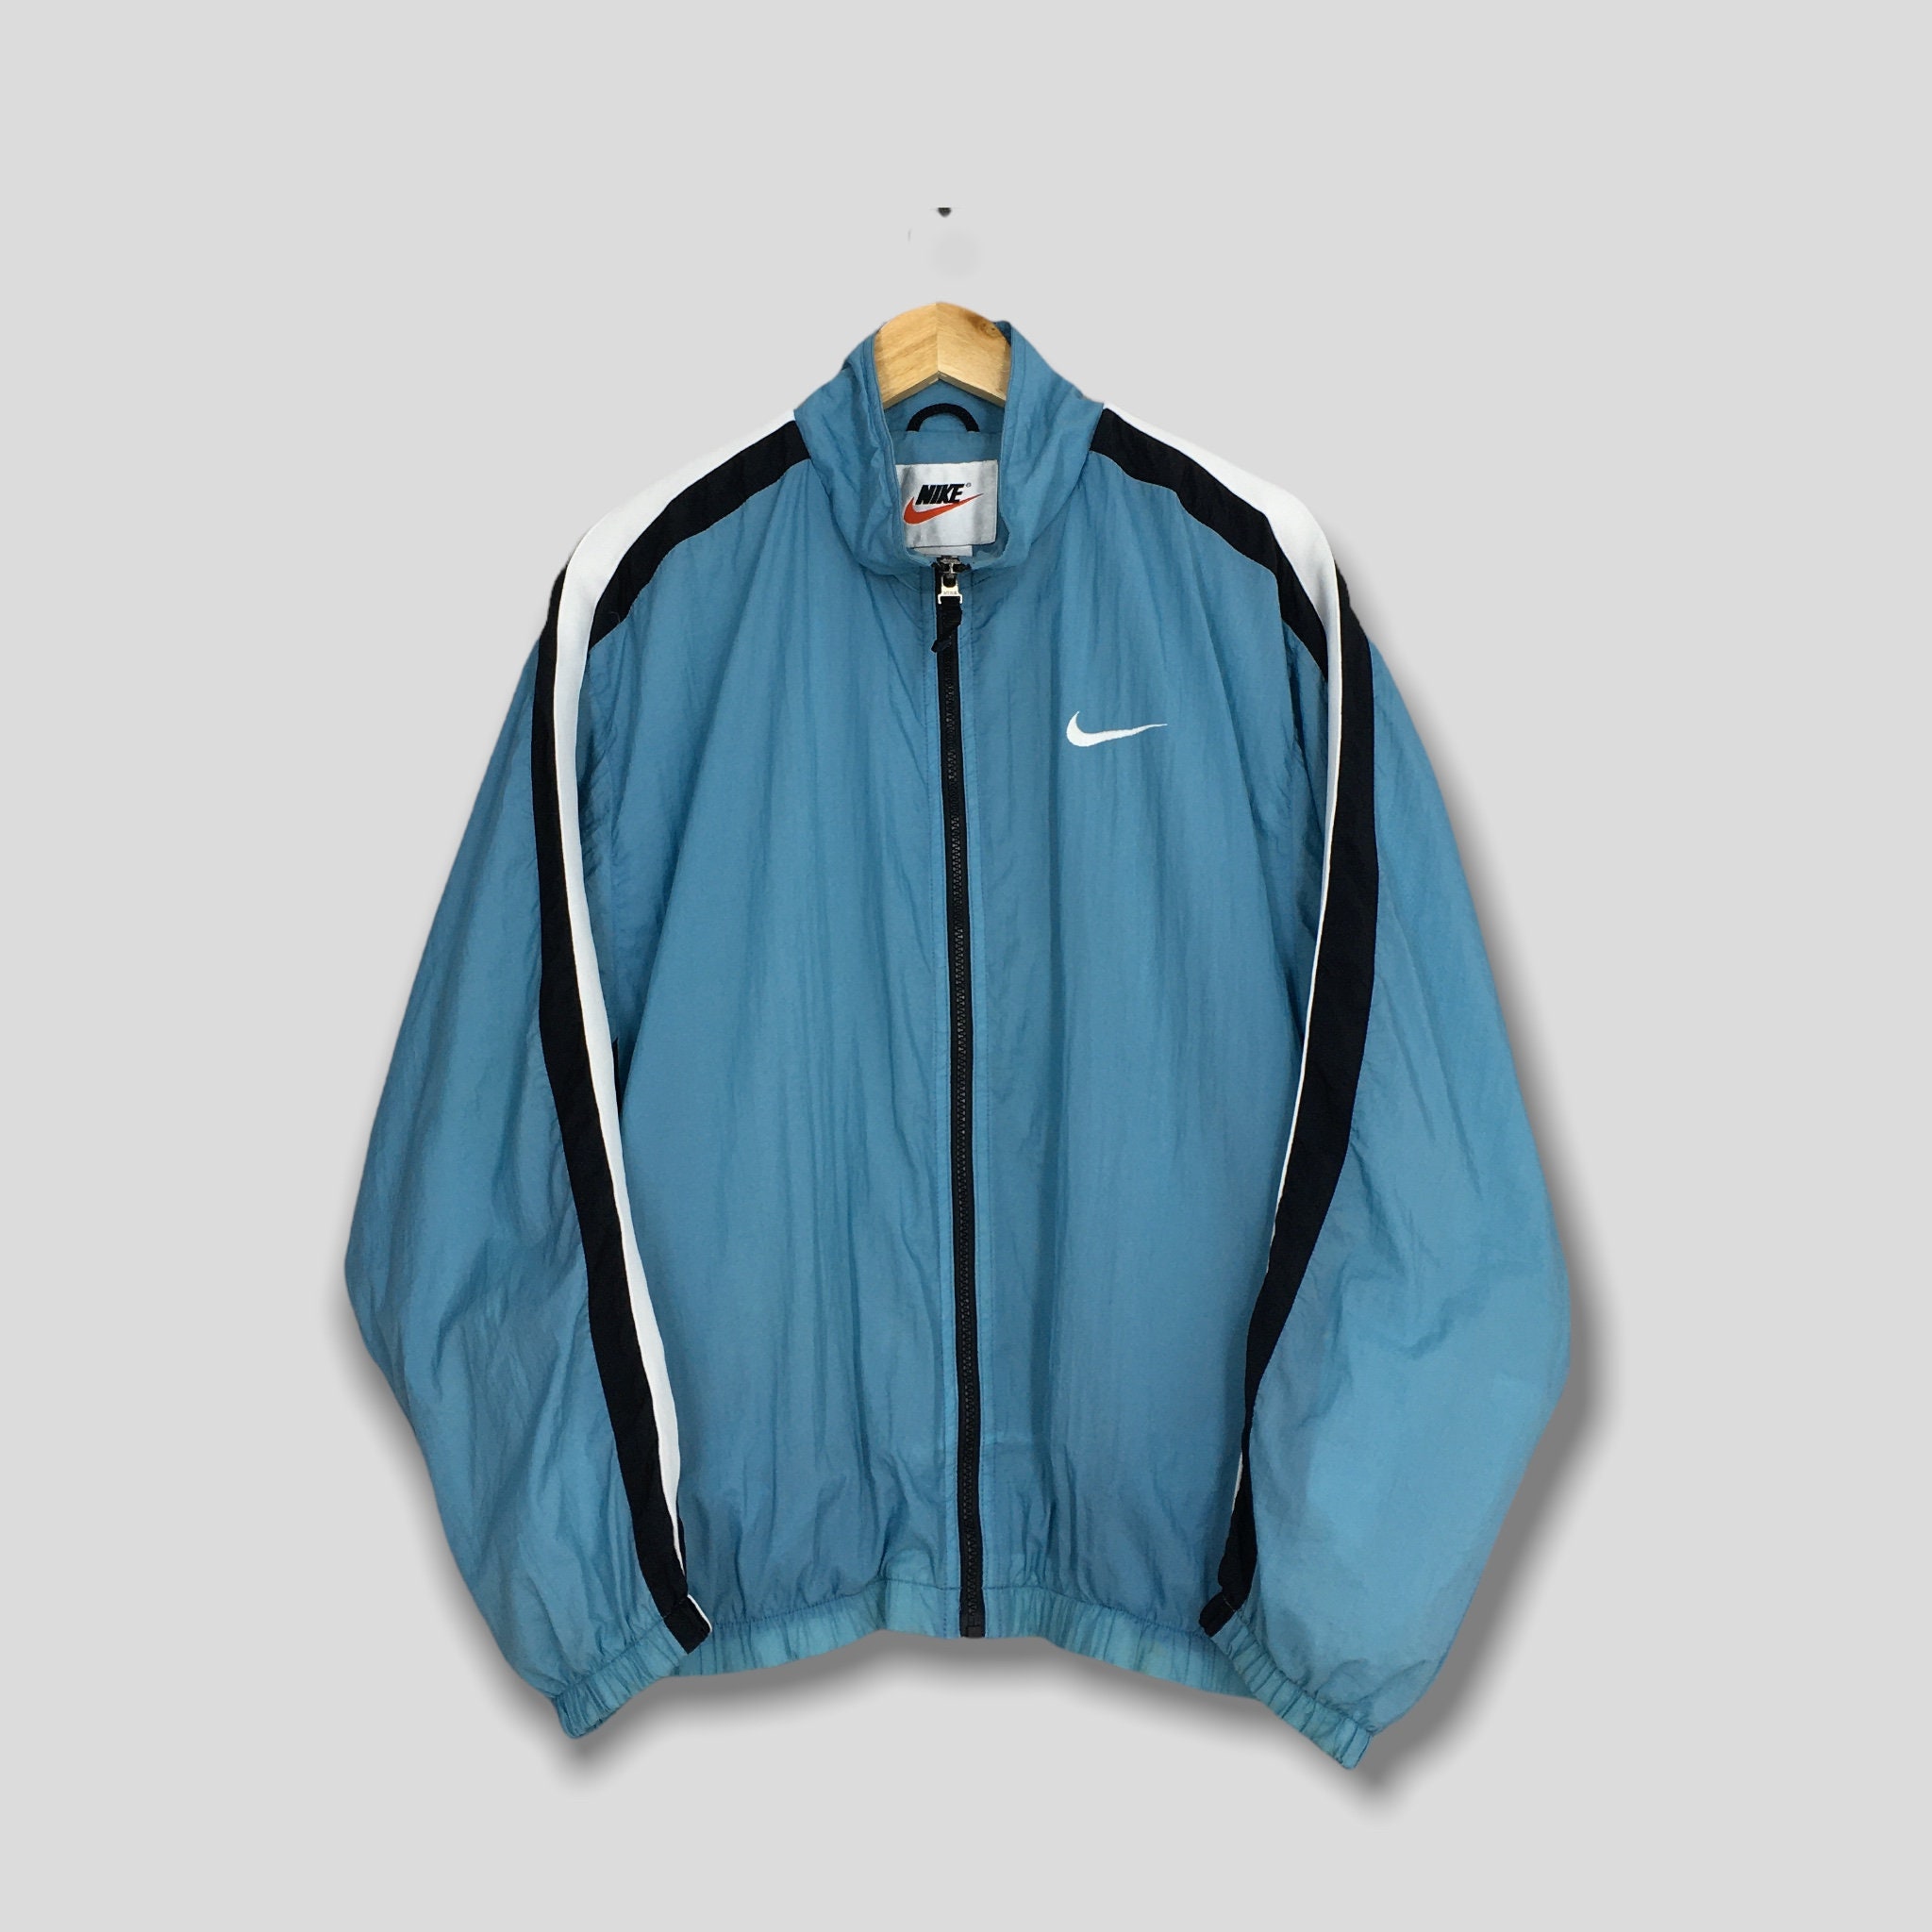 vertel het me Slank Tegenstander Vintage 90's Nike Swoosh Blue Windbreaker Jacket Large - Etsy Finland